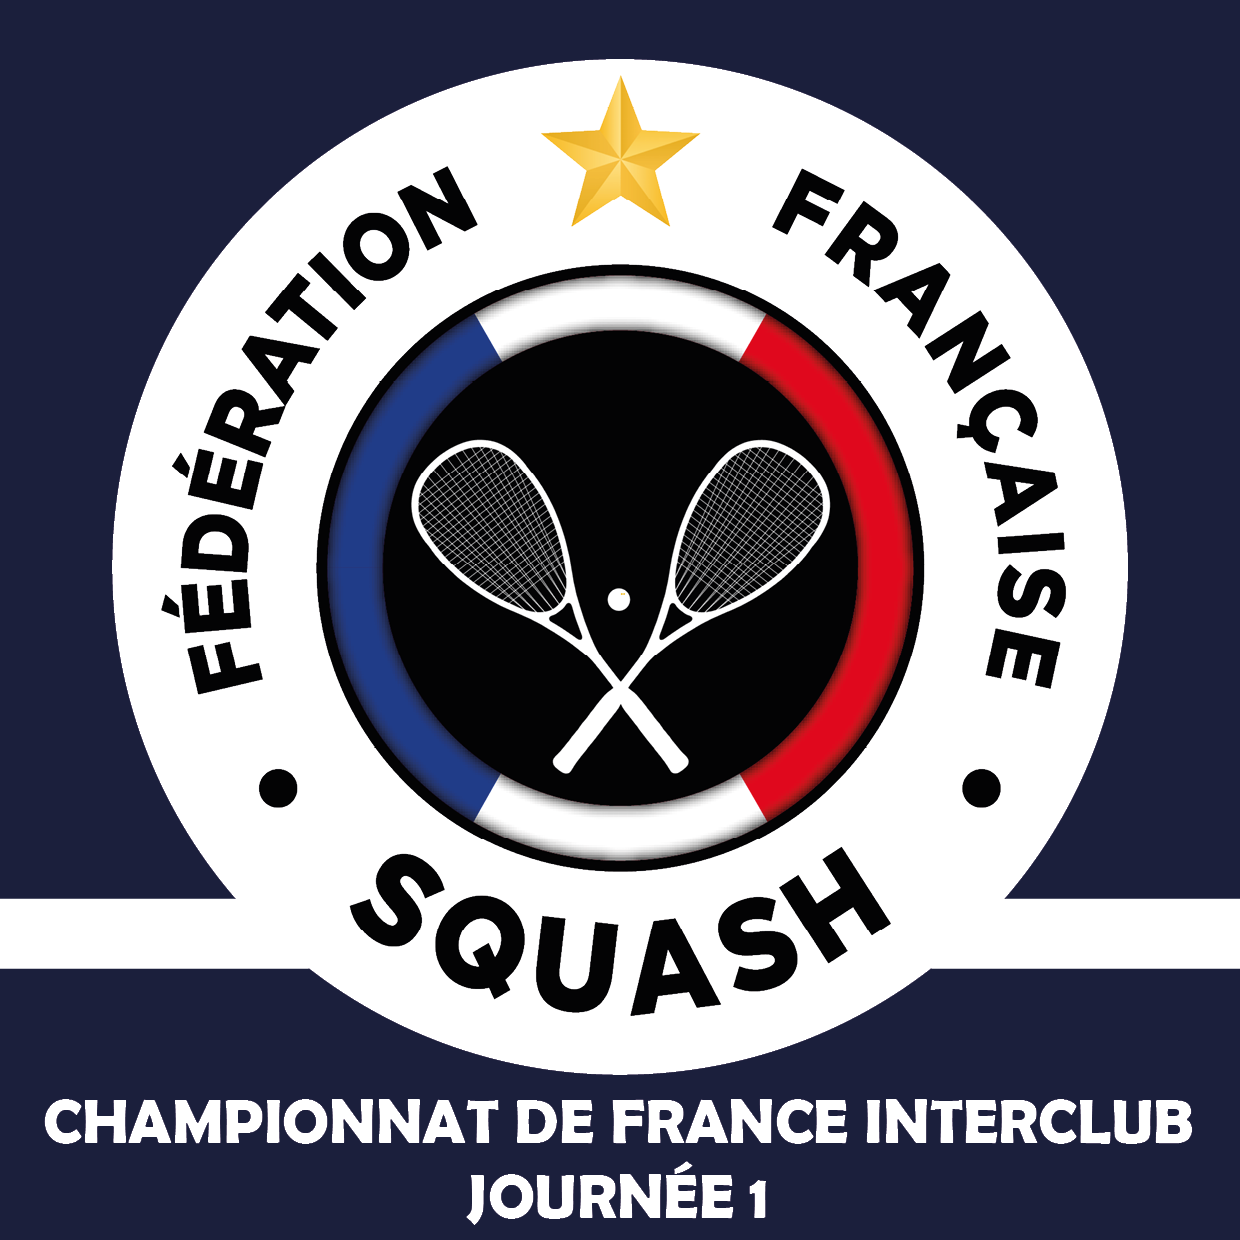 CHAMPIONNAT DE FRANCE INTERCLUBS, J-1 !